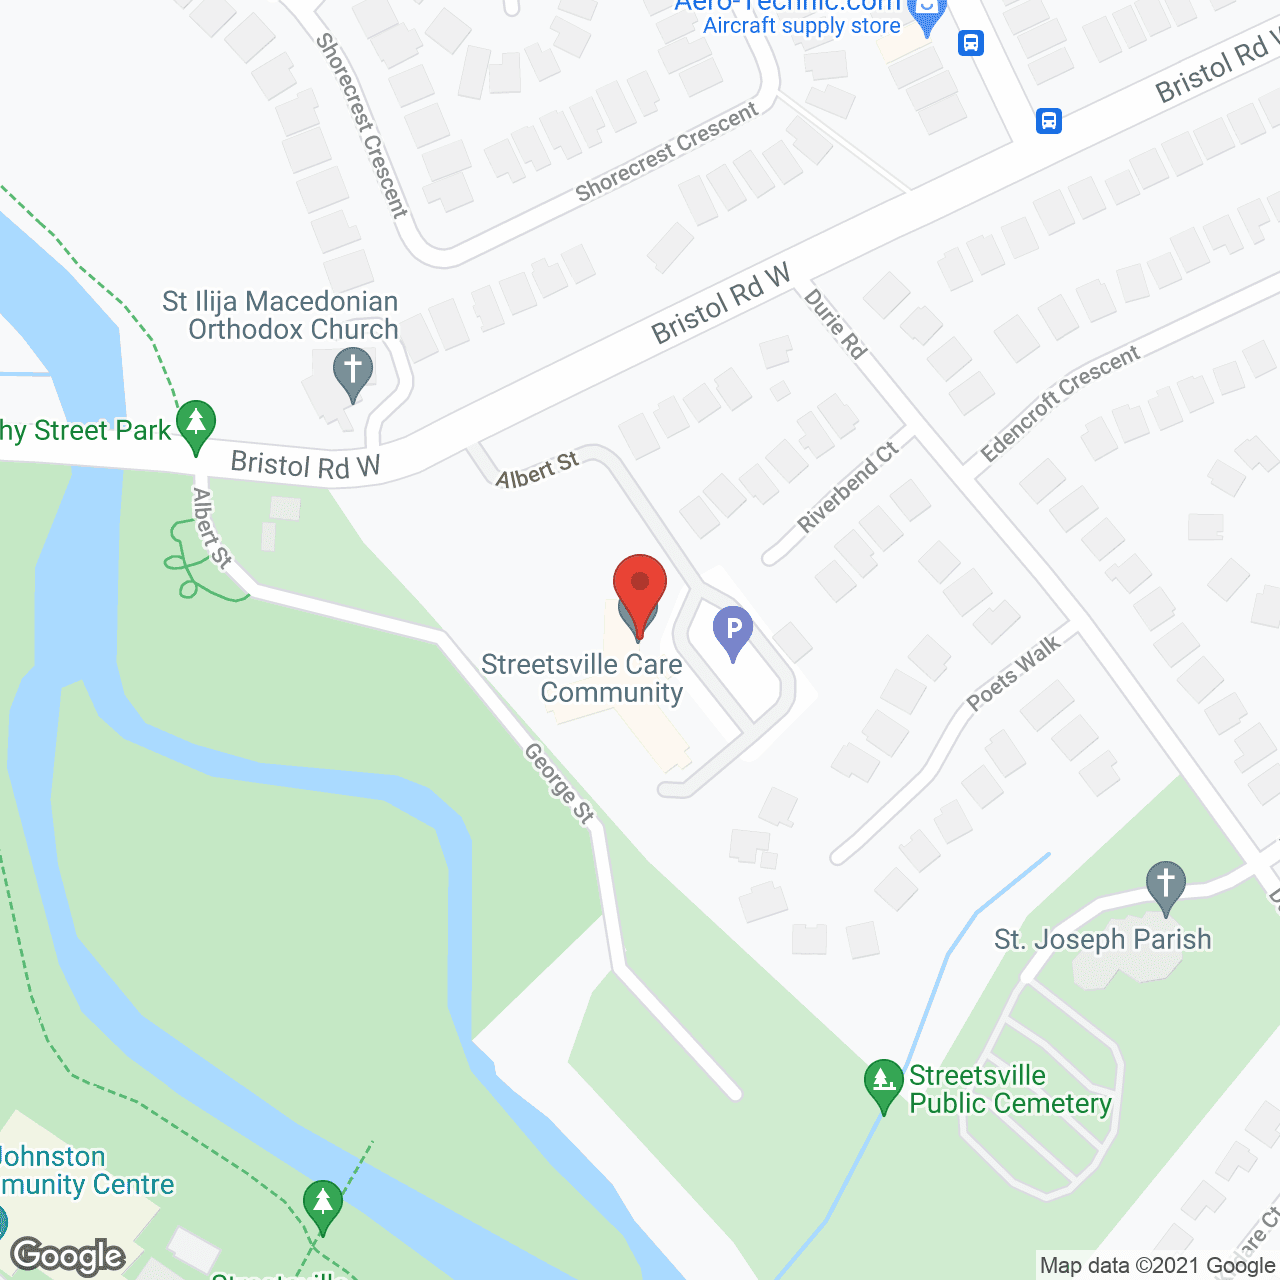 Streetsville Care Community in google map